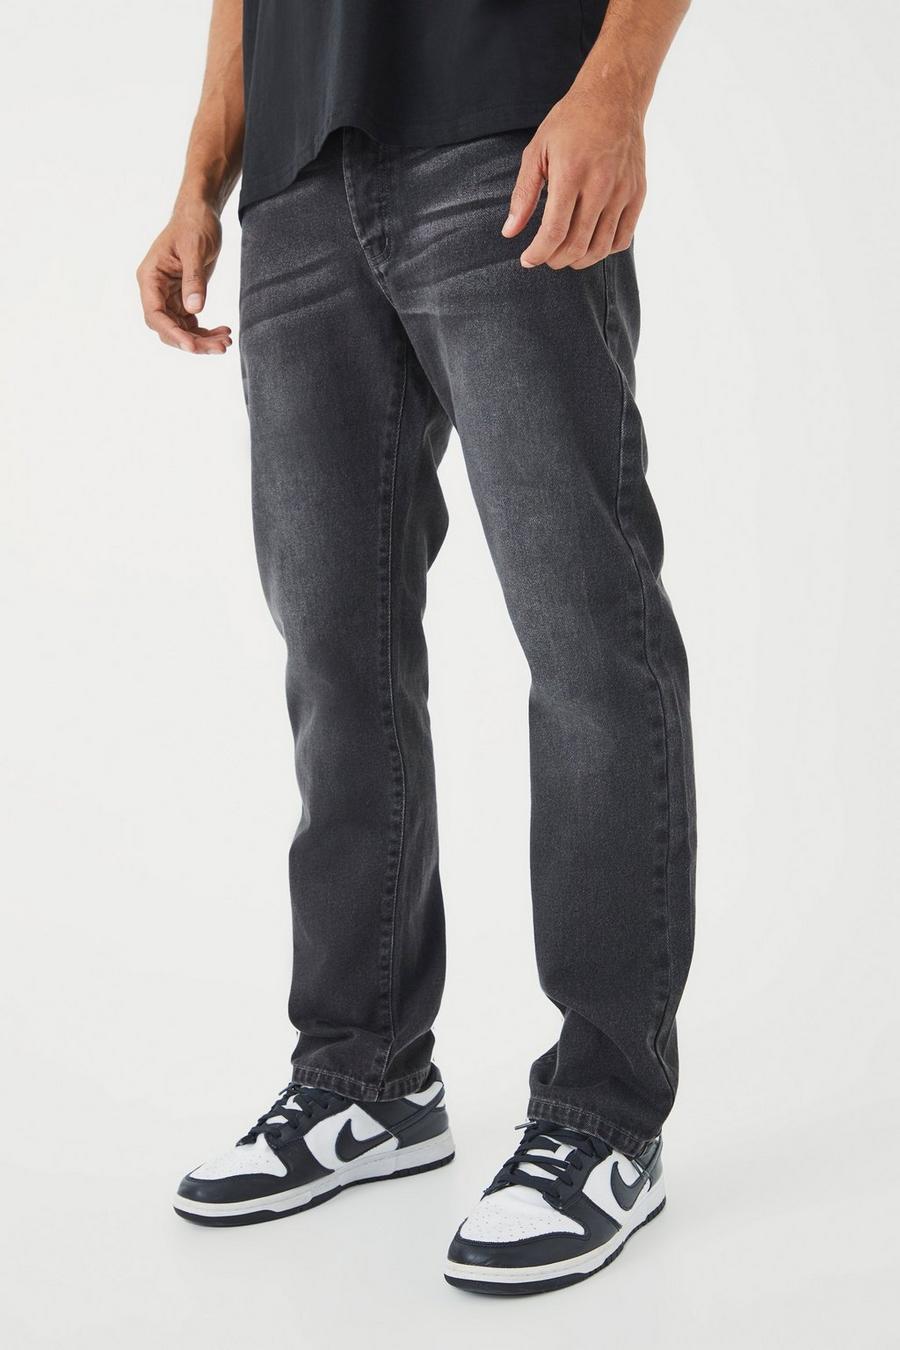 Jeans mit geradem Bein, Charcoal gris